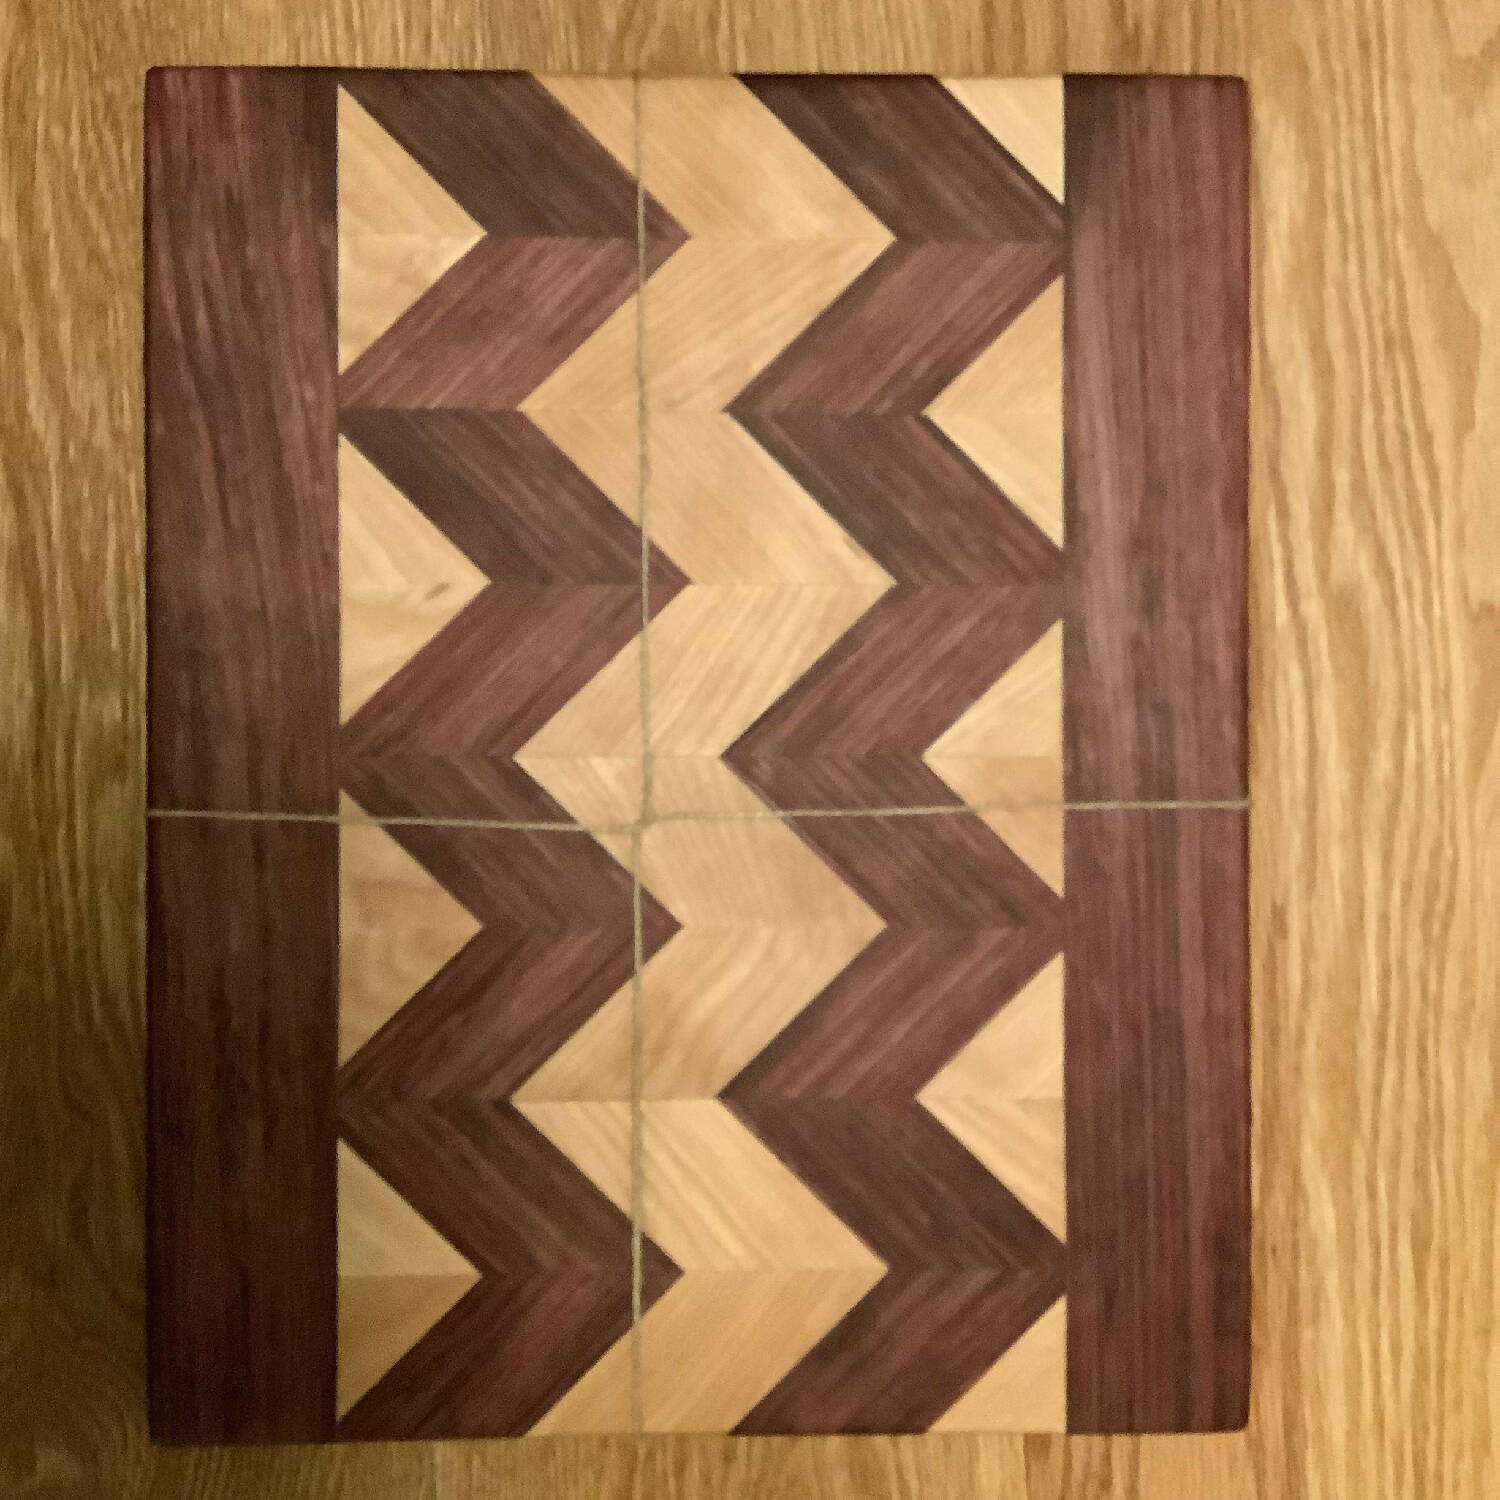 12”x14.5” birch and purple heart chevron pattern cutting board